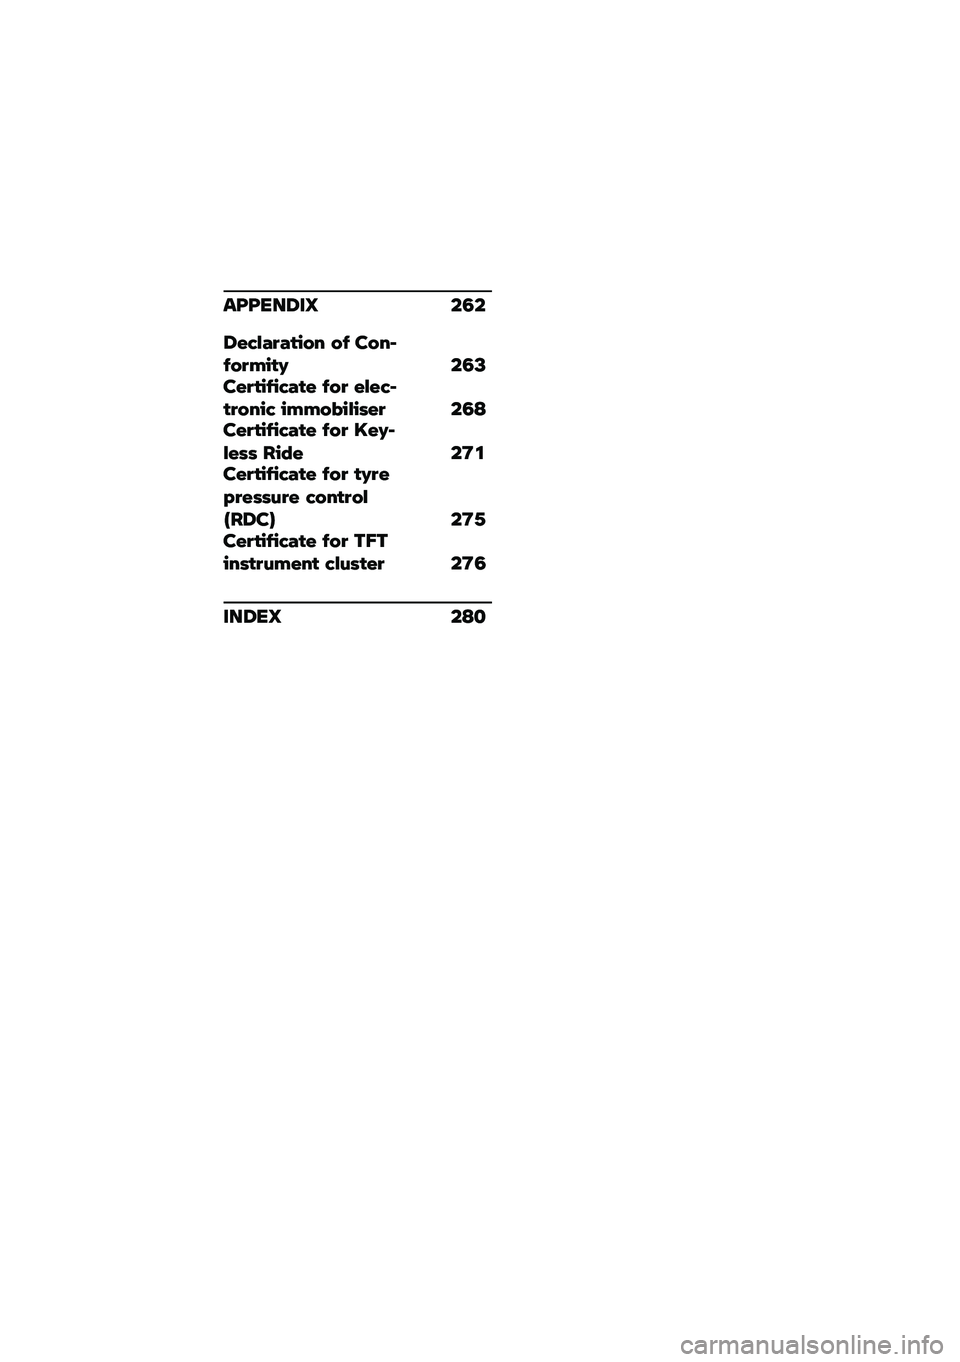 BMW MOTORRAD F 850 GS 2021  Riders Manual (in English) ��C�C���8��N ��5�
�8���/� �#� �*��+�% �+�$ ��+�%�.�$�+�#�-��*�" ��5�@���#�*��$��� �*� �$�+�# ��/���.�*�#�+�%�� ��-�-�+�(��/��!��# ��5�<���#�*��$��� �*� �$�+�# �E��"�